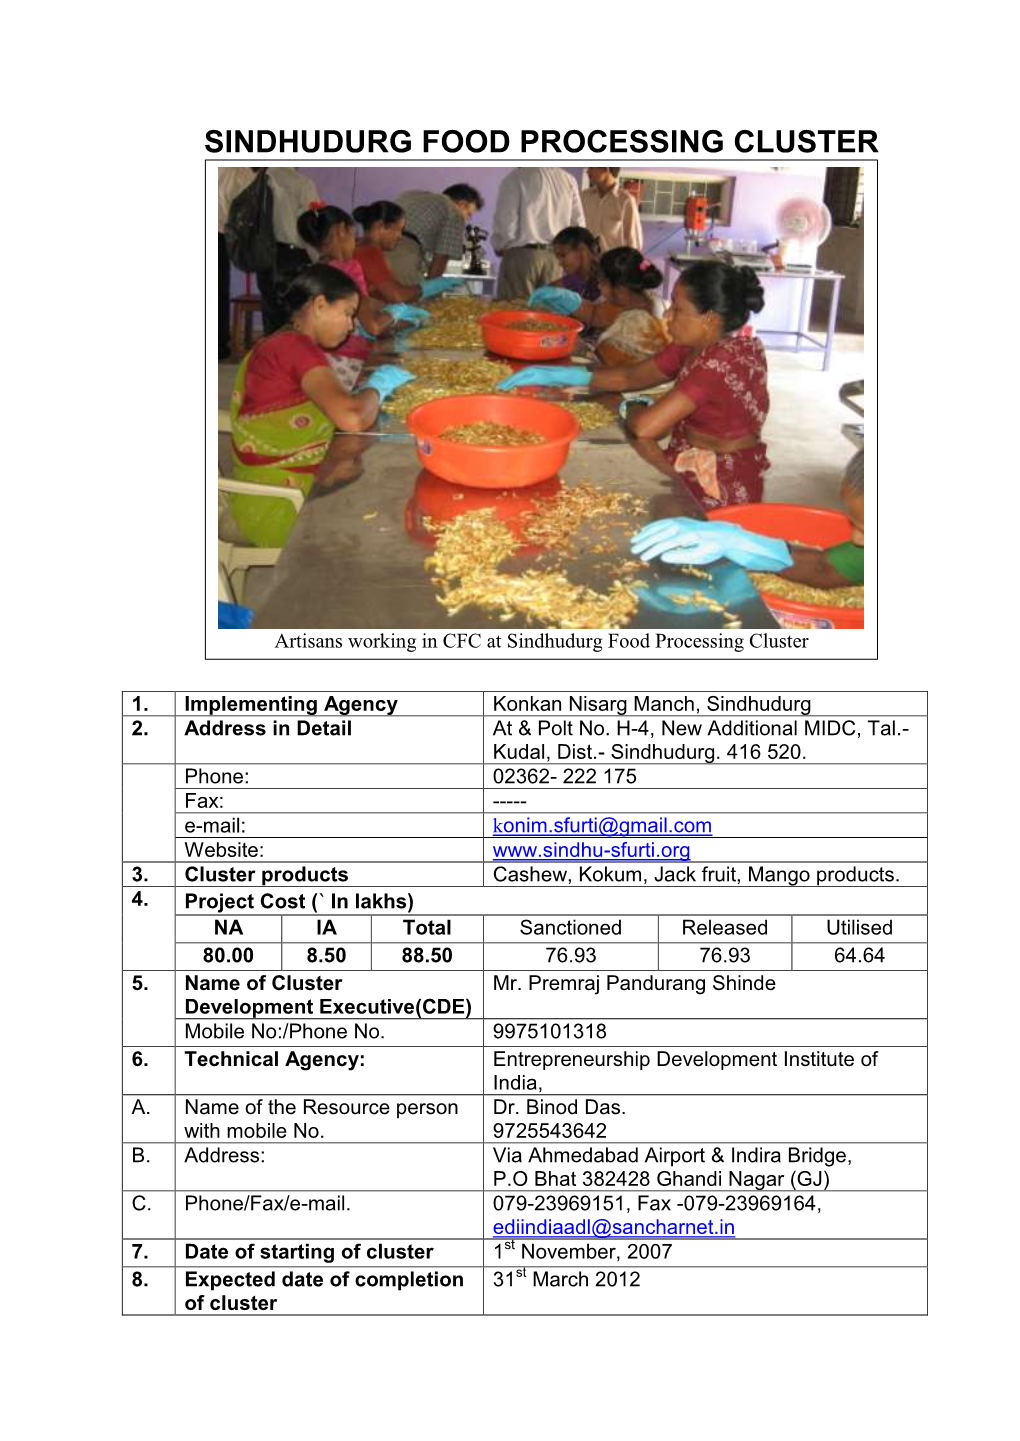 Sindhudurg Food Processing Cluster